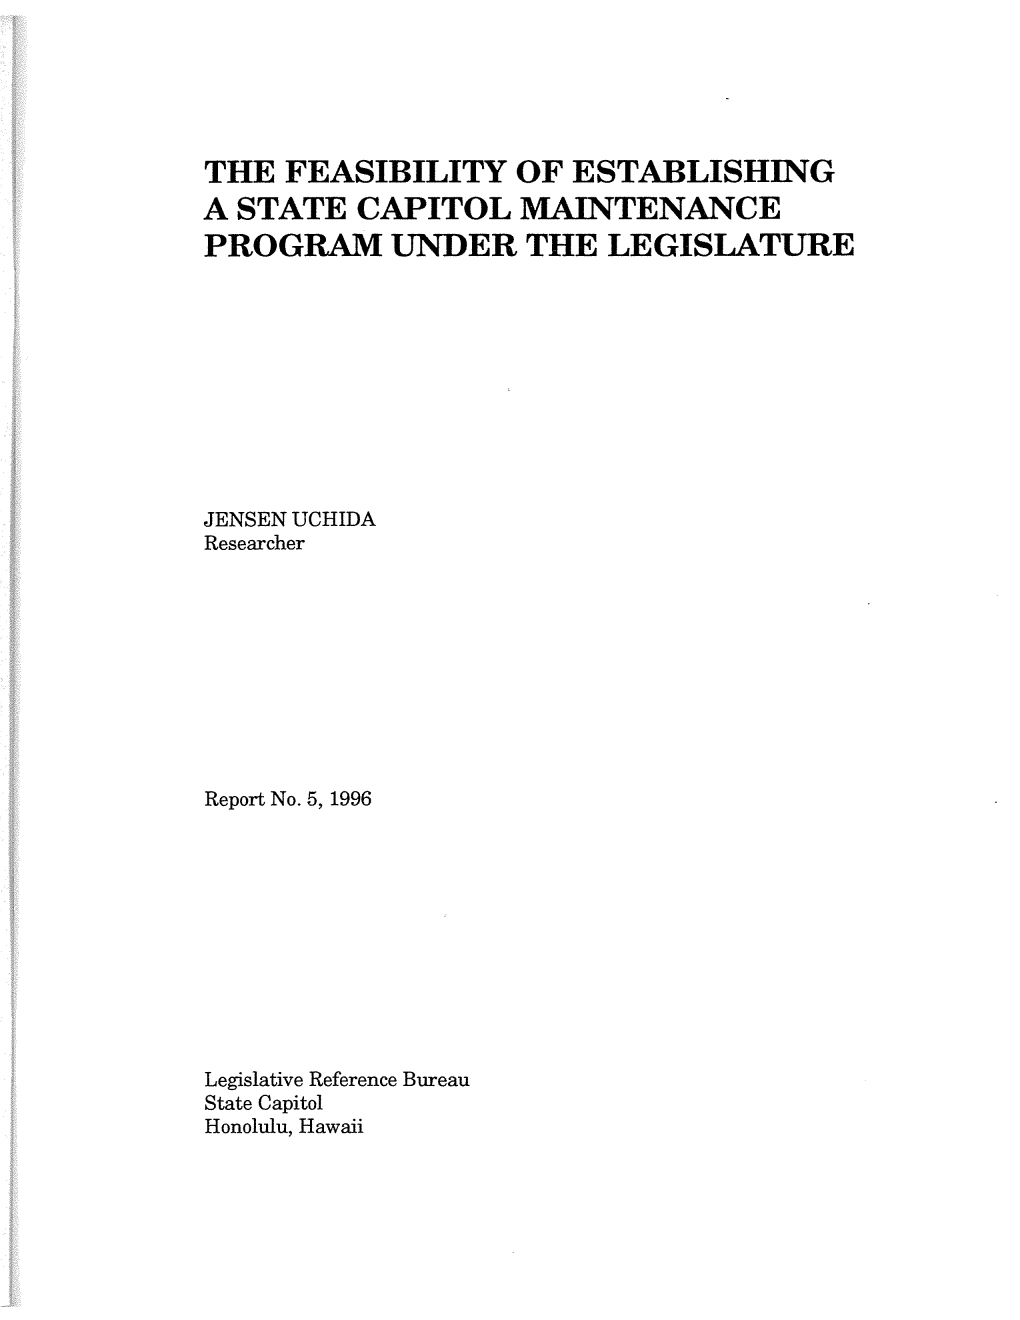 The Feasibility of Establishing a State Capitol Maintenance Program Under the Legislature